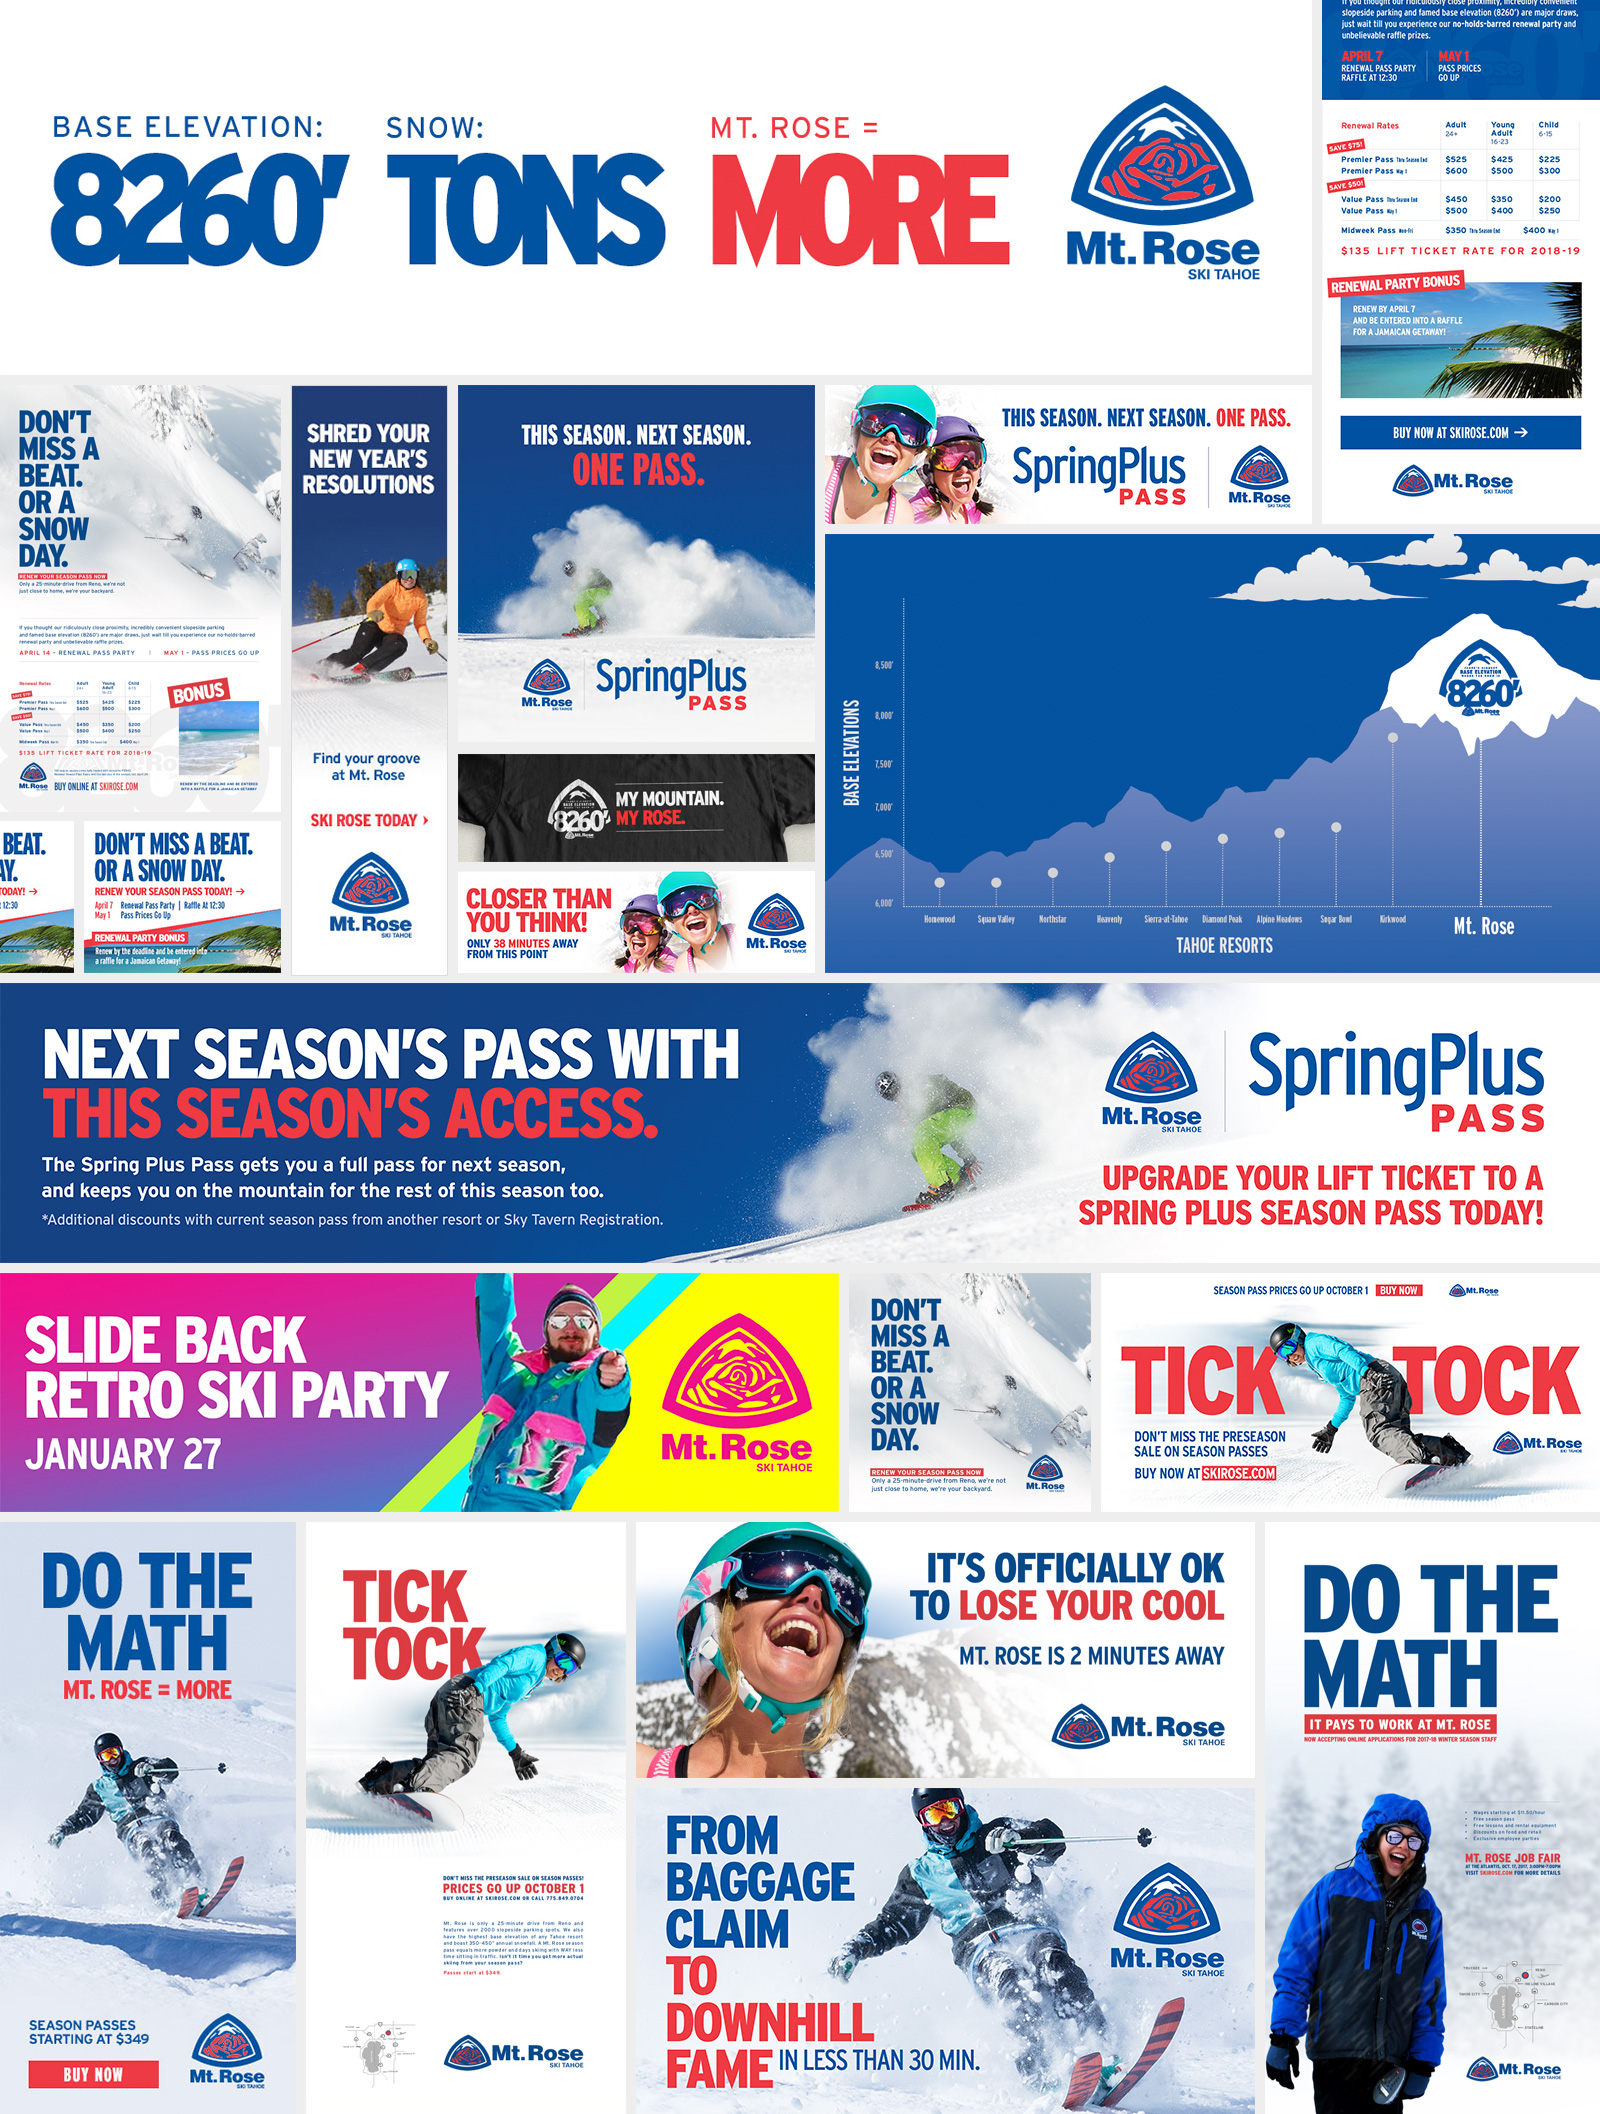 Mt. Rose Ski Resort Marketing Collateral